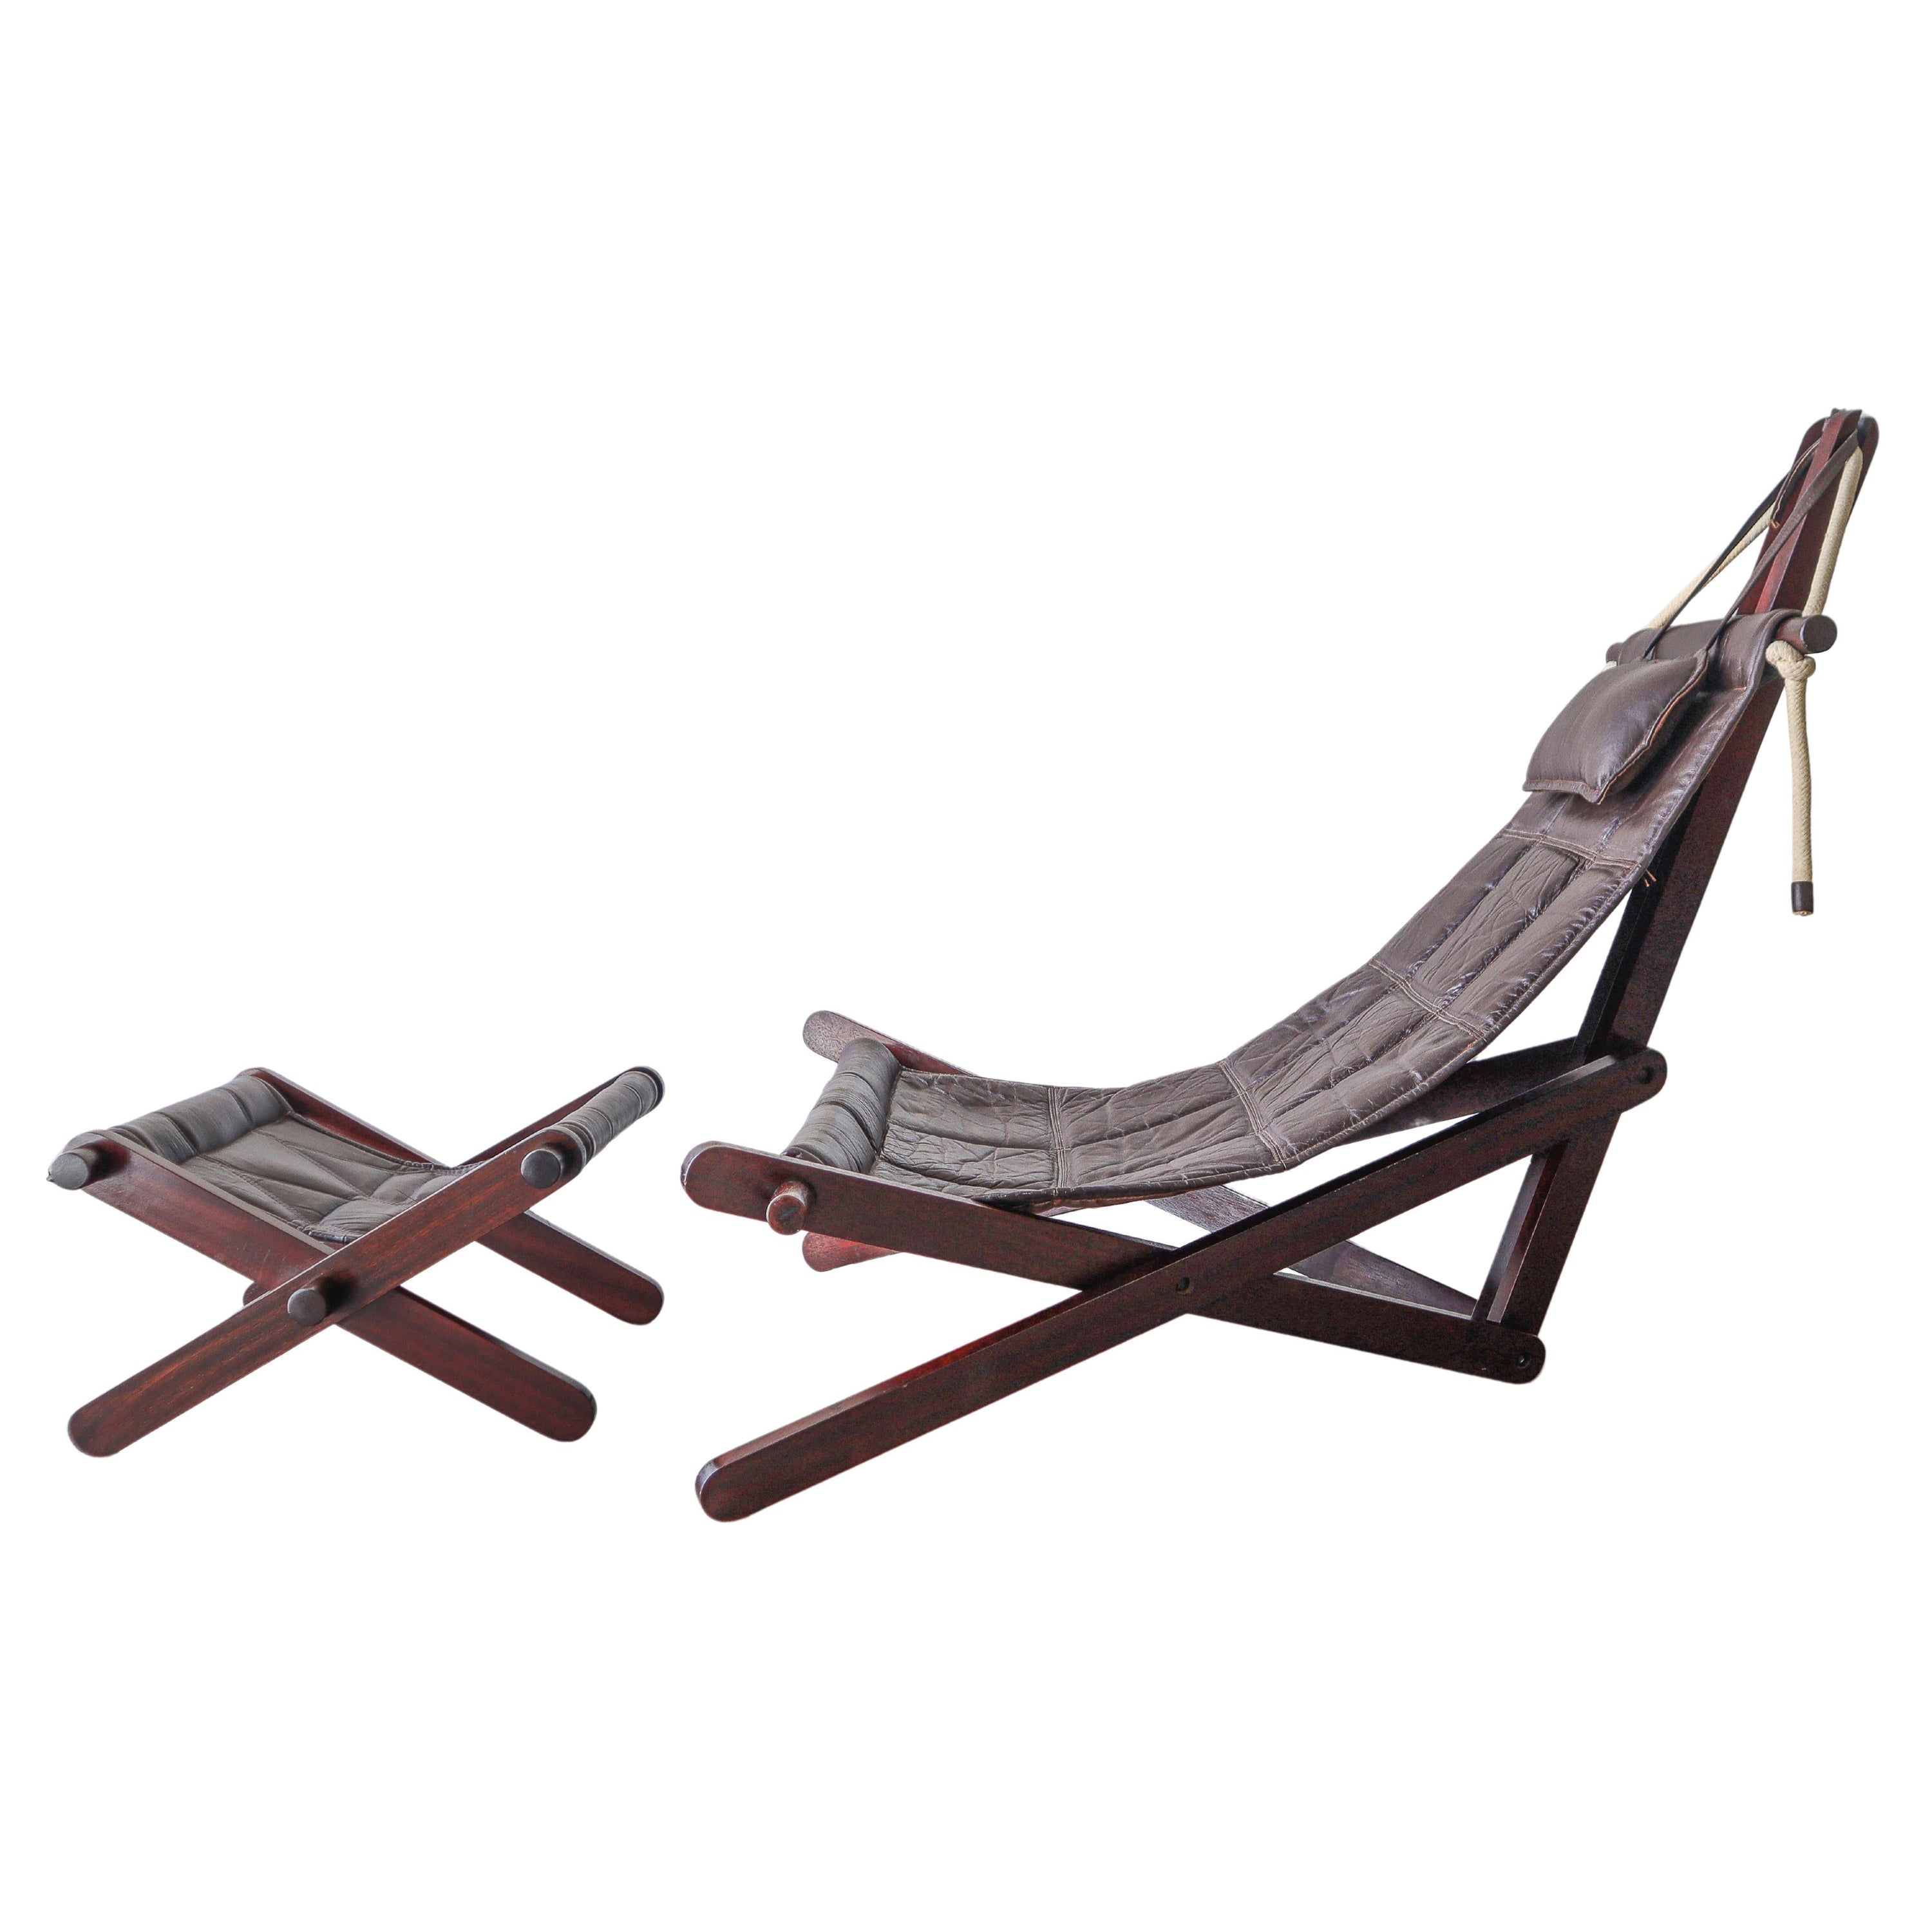 Rare Dominic Michaelis Leather Sling Sail Chair and Ottoman